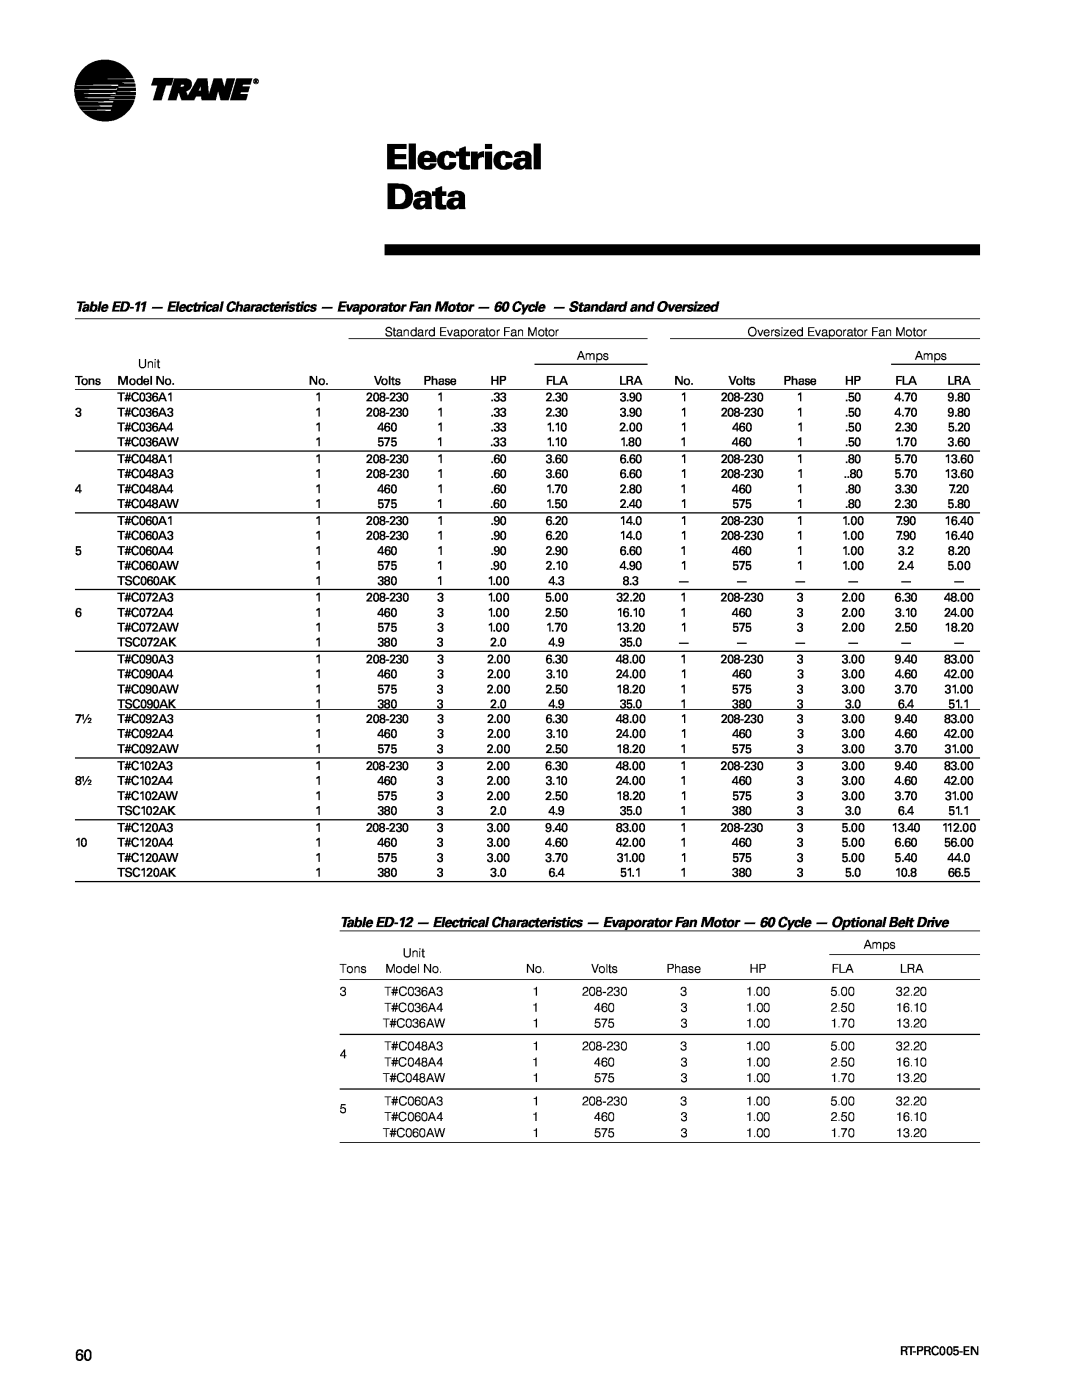 Trane RT-PRC005 manual Electrical Data 